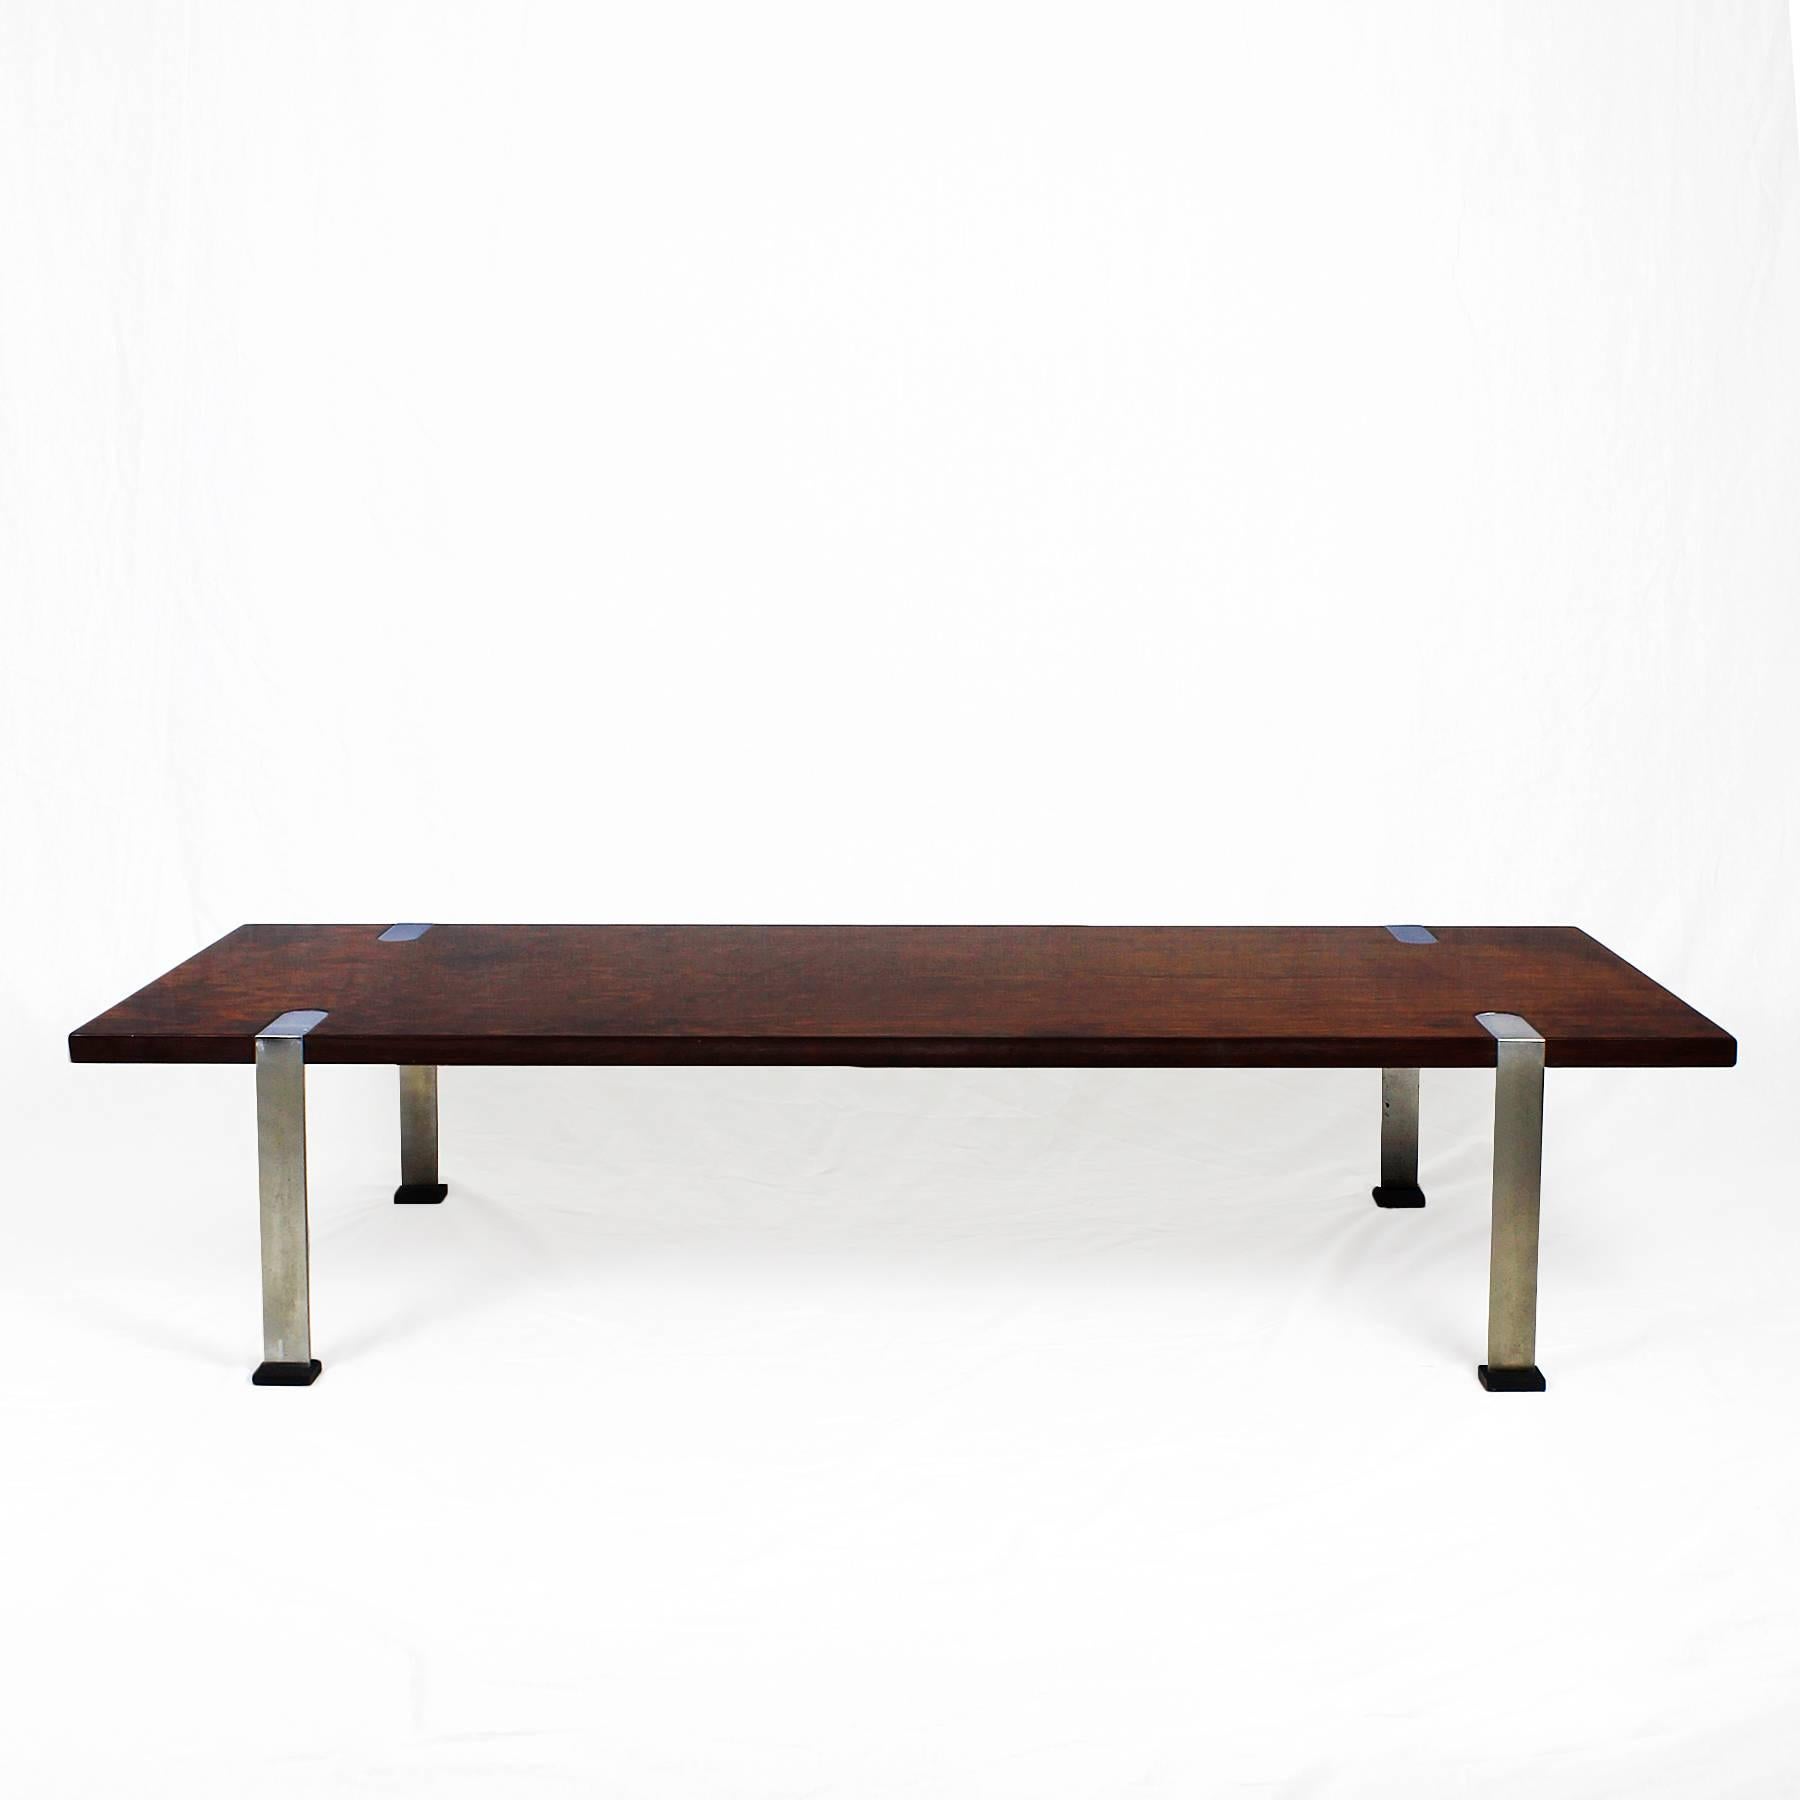 Coffee table, mahogany veneer and nickel plated steel legs with black bases.

Italy, circa 1960.